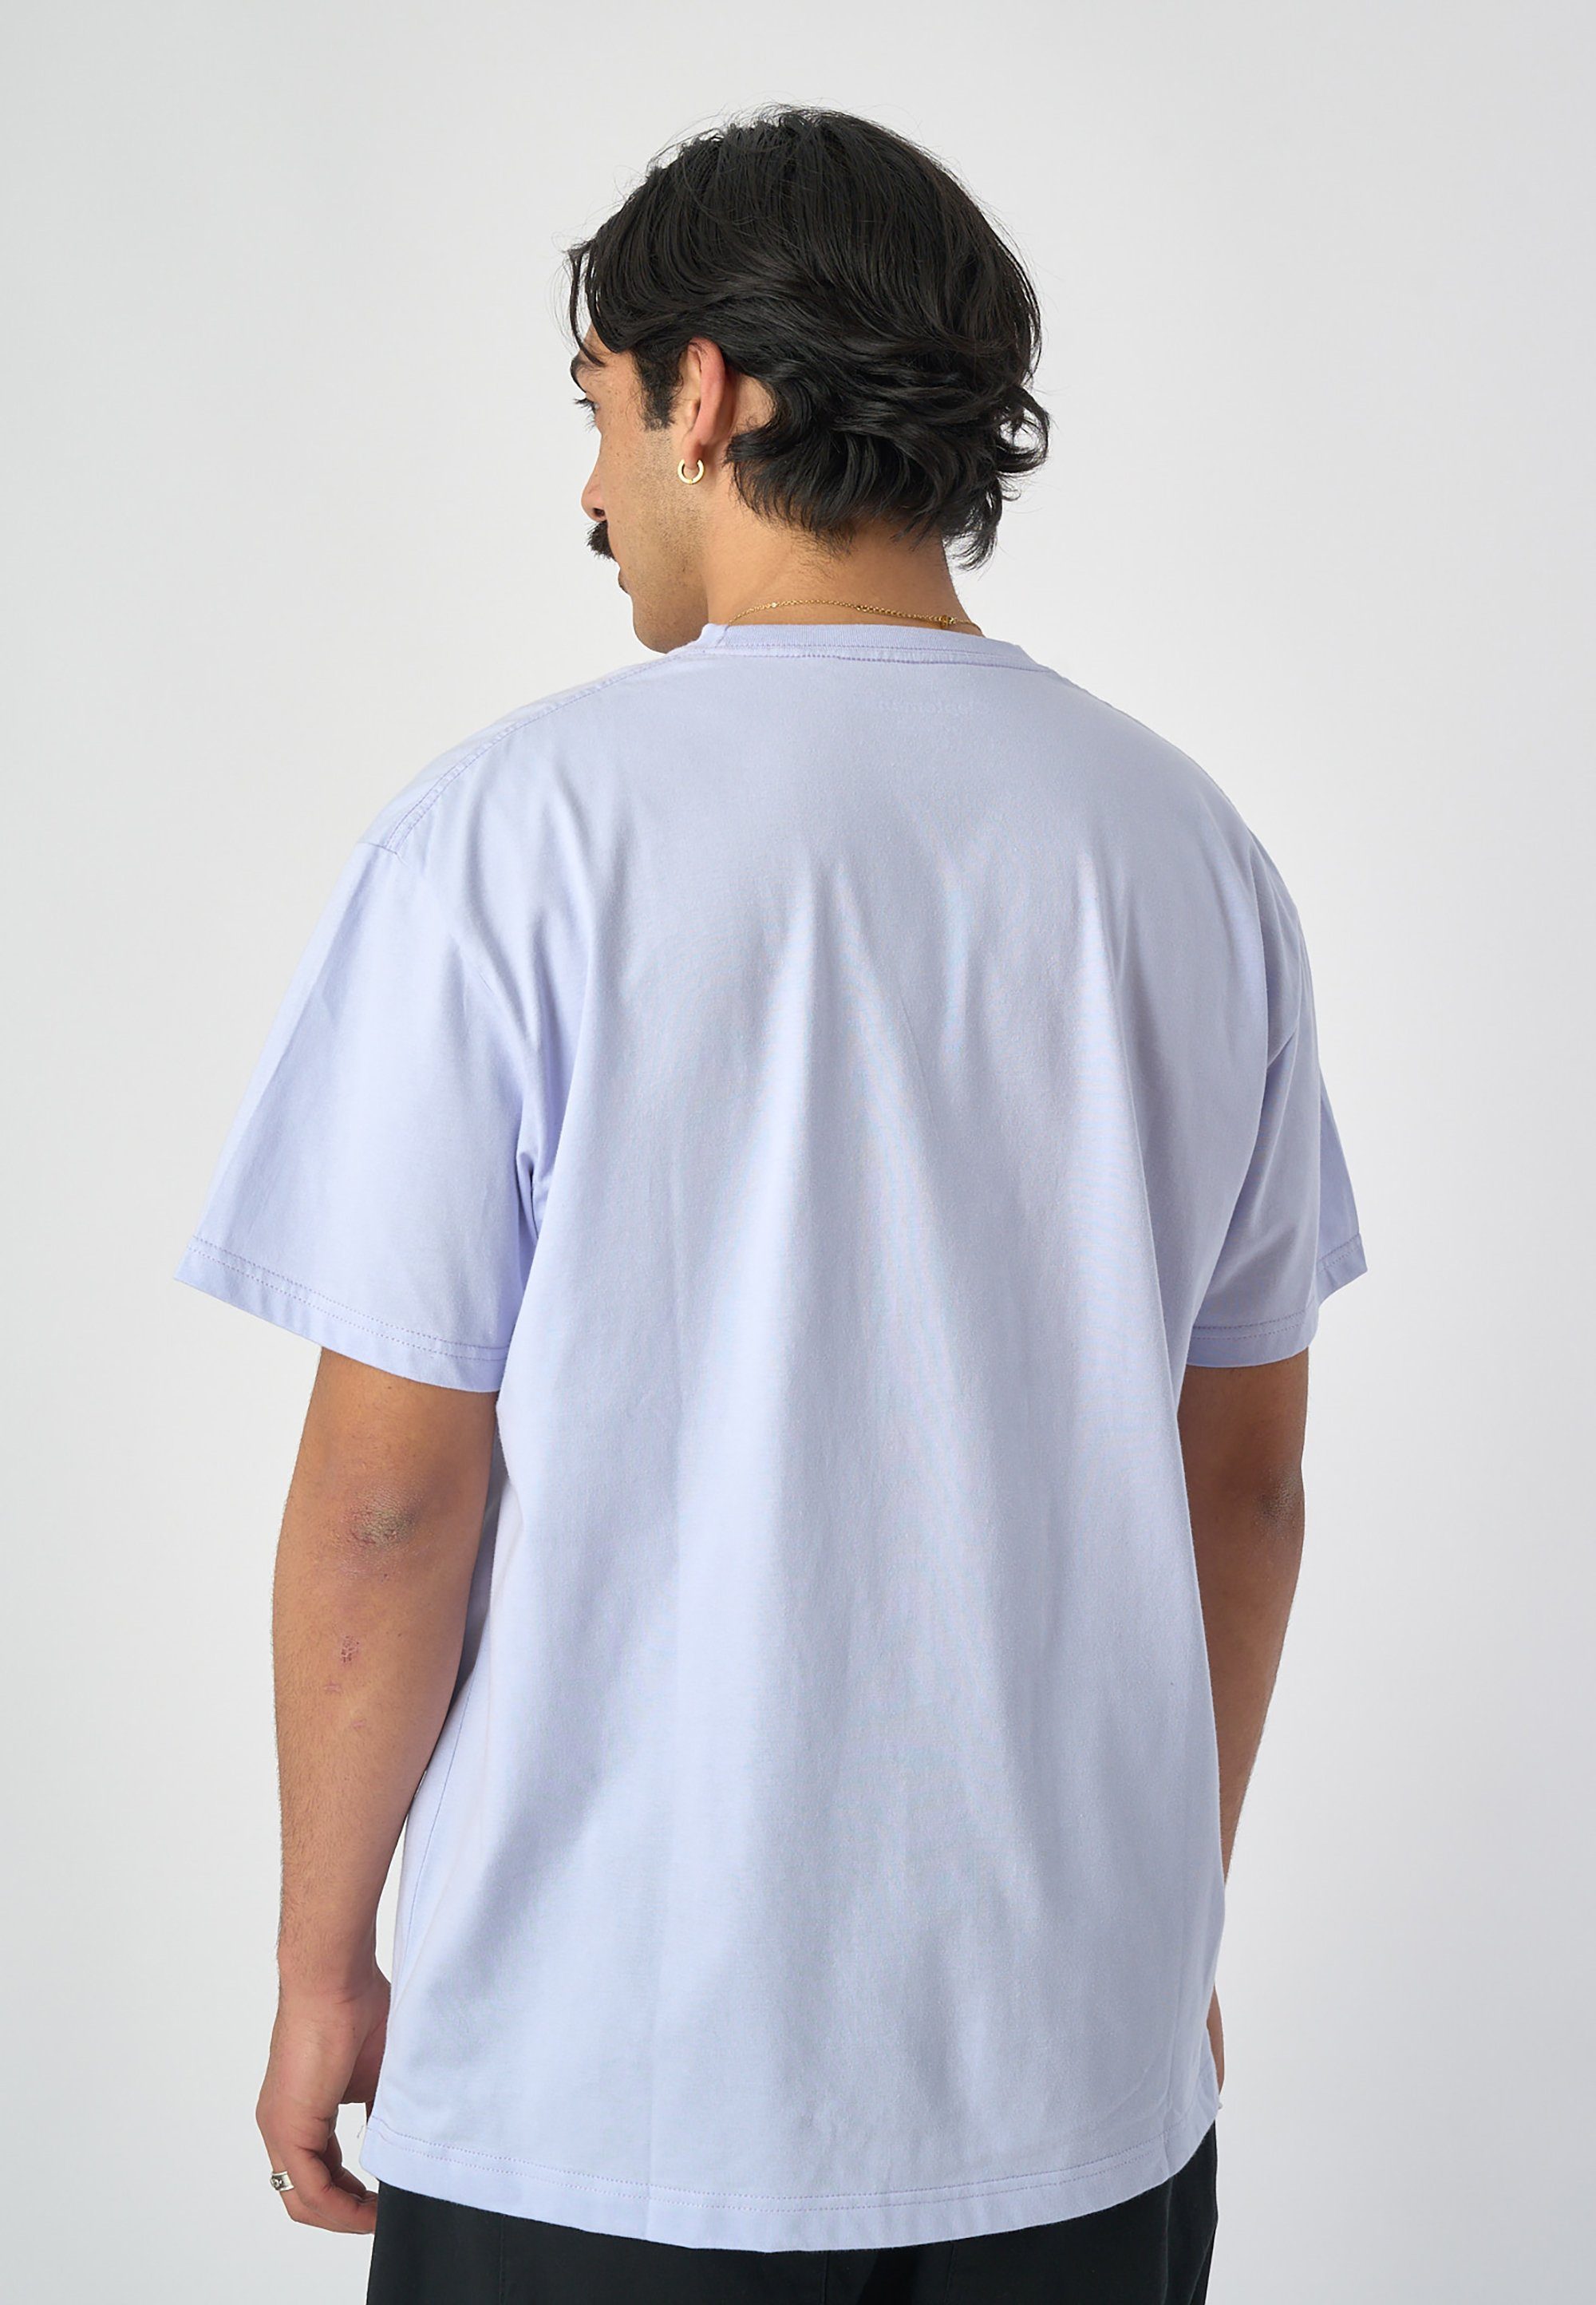 hellblau coolem mit T-Shirt Gull Stealy Cleptomanicx Frontprint